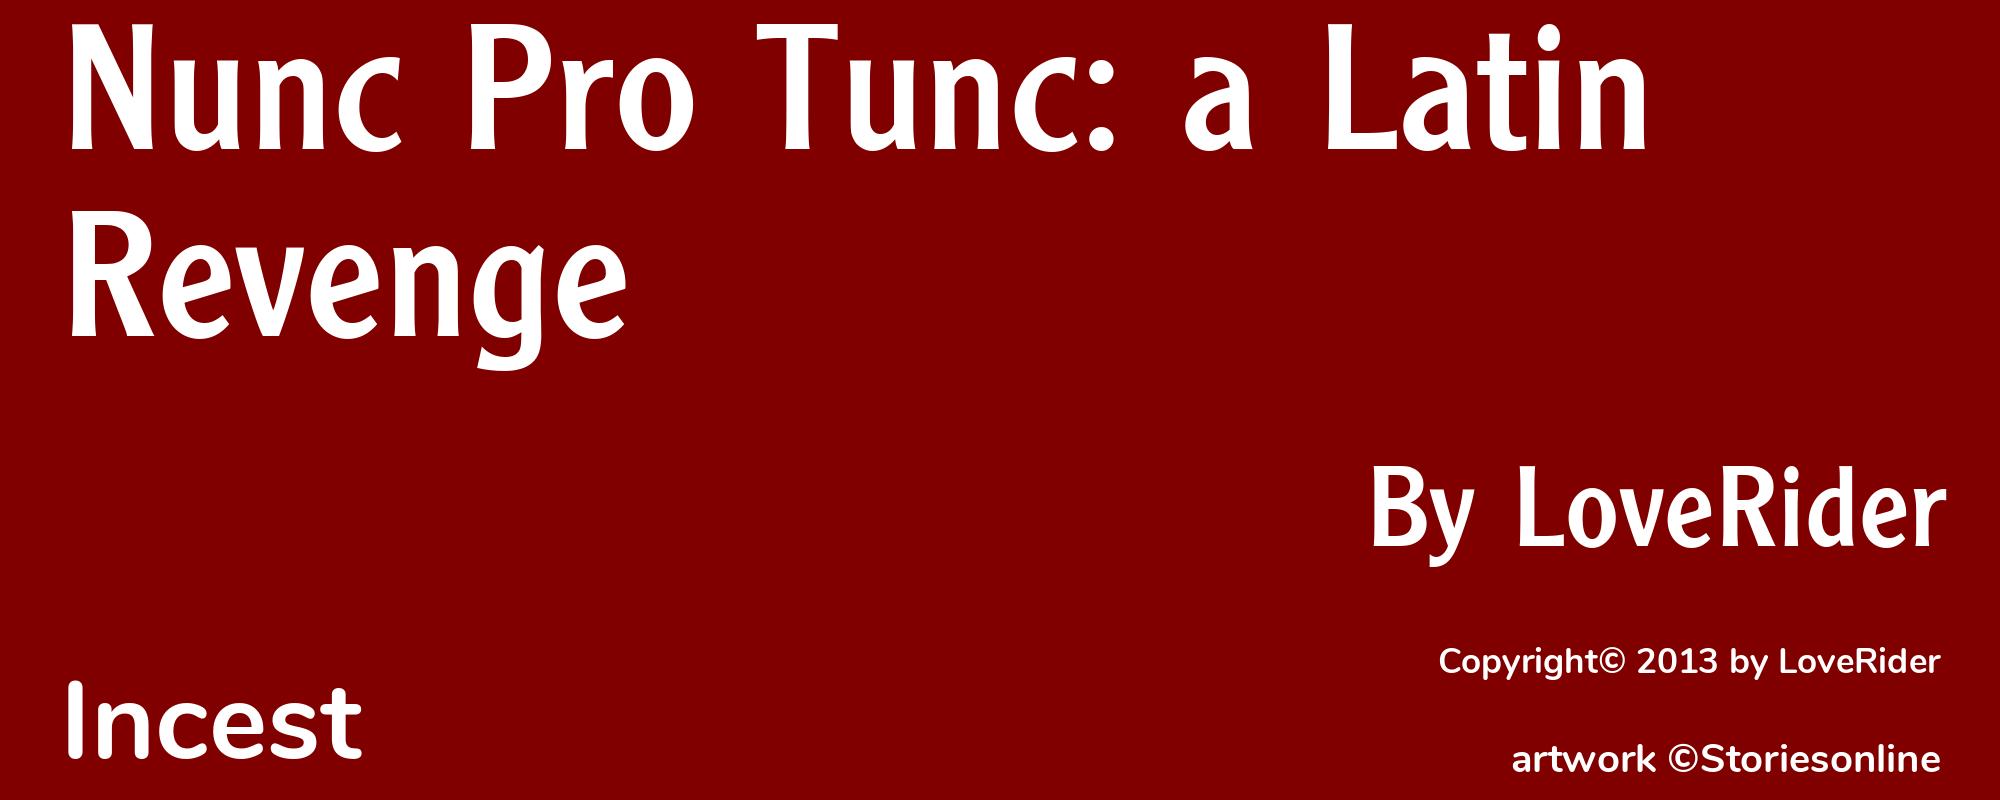 Nunc Pro Tunc: a Latin Revenge - Cover